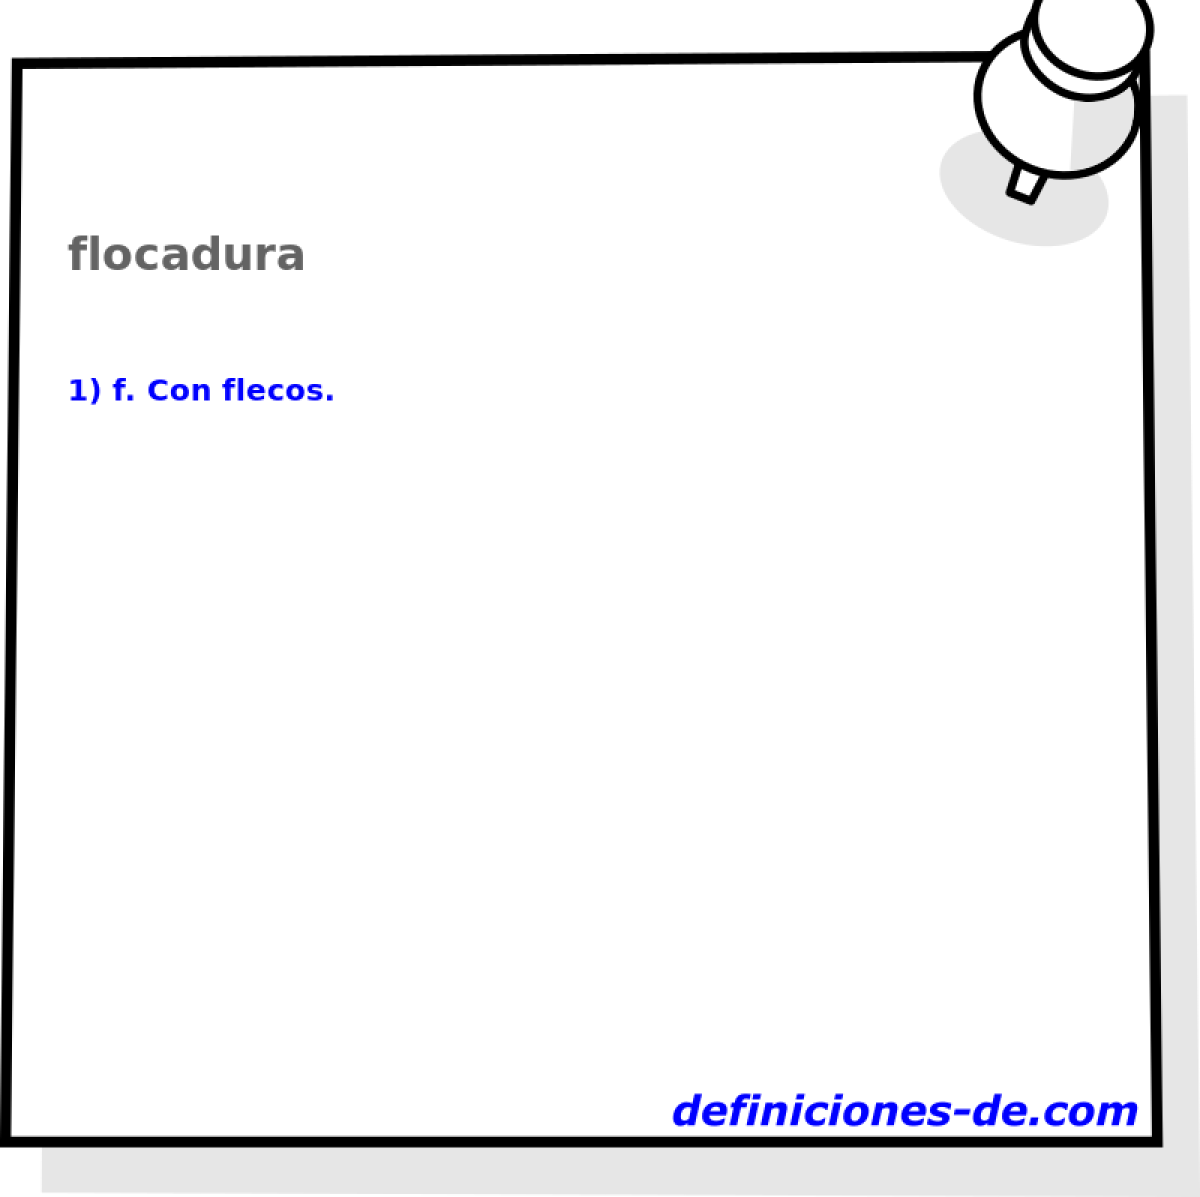 flocadura 